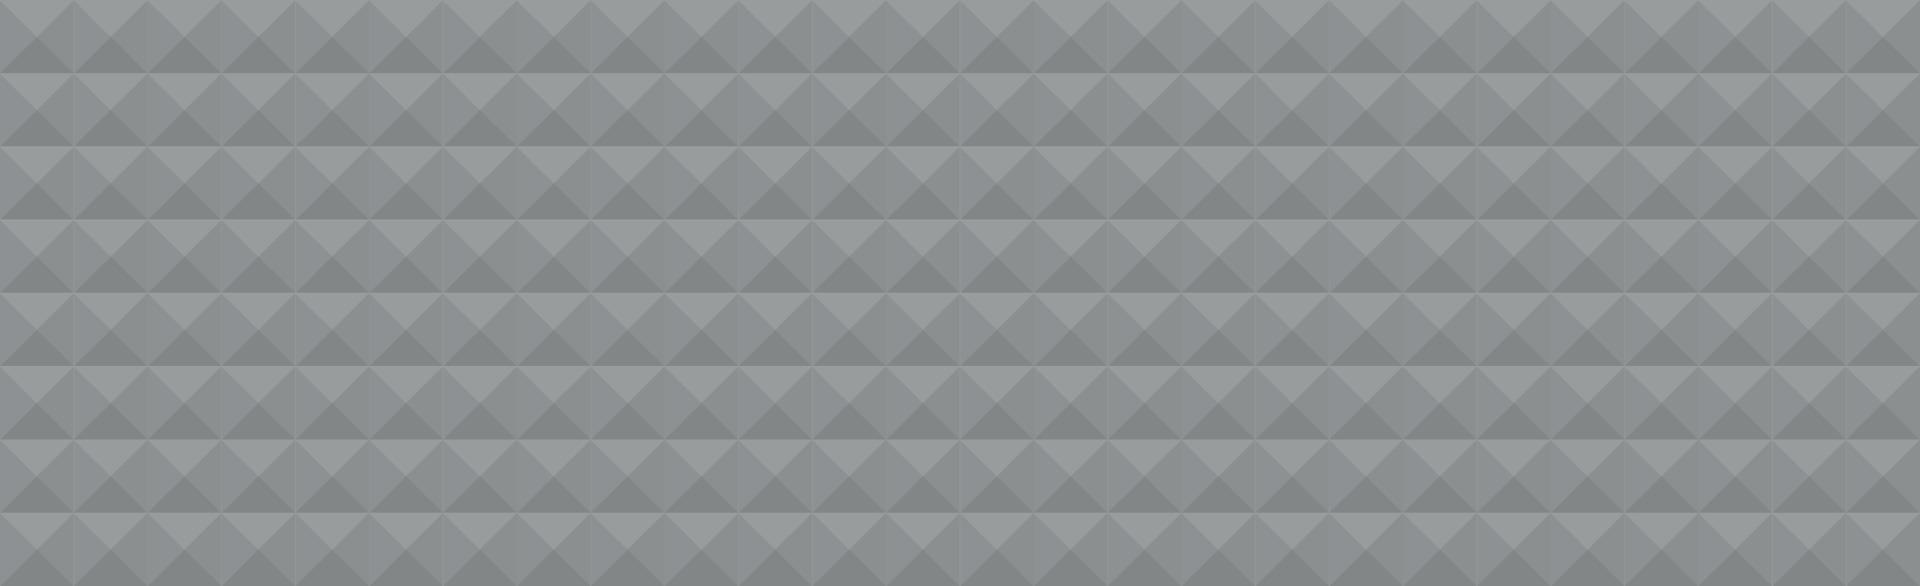 abstrato panorâmicos quadrados cinza de fundo web - vetor